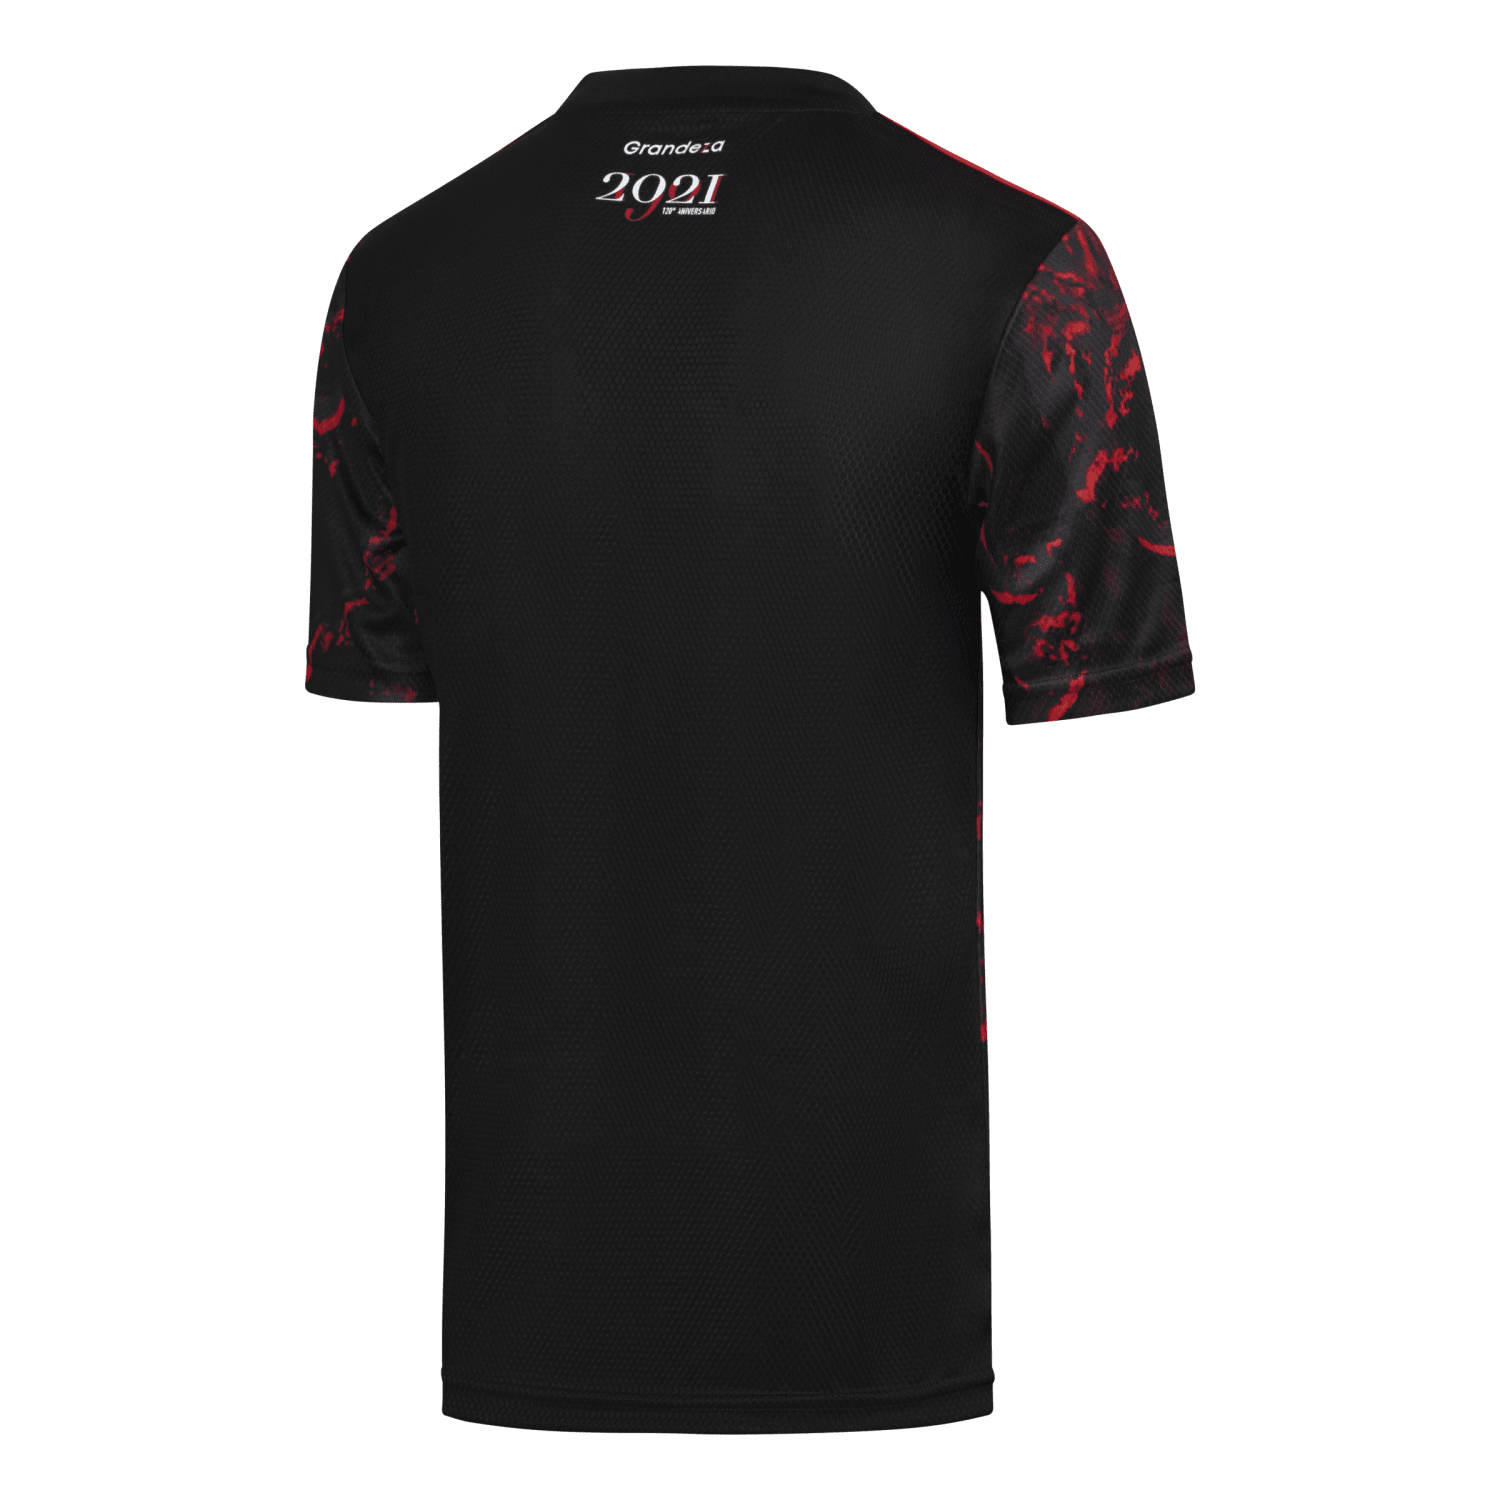 Camiseta Titular Flash Rugby UNSJen Sportotal - Sportotal